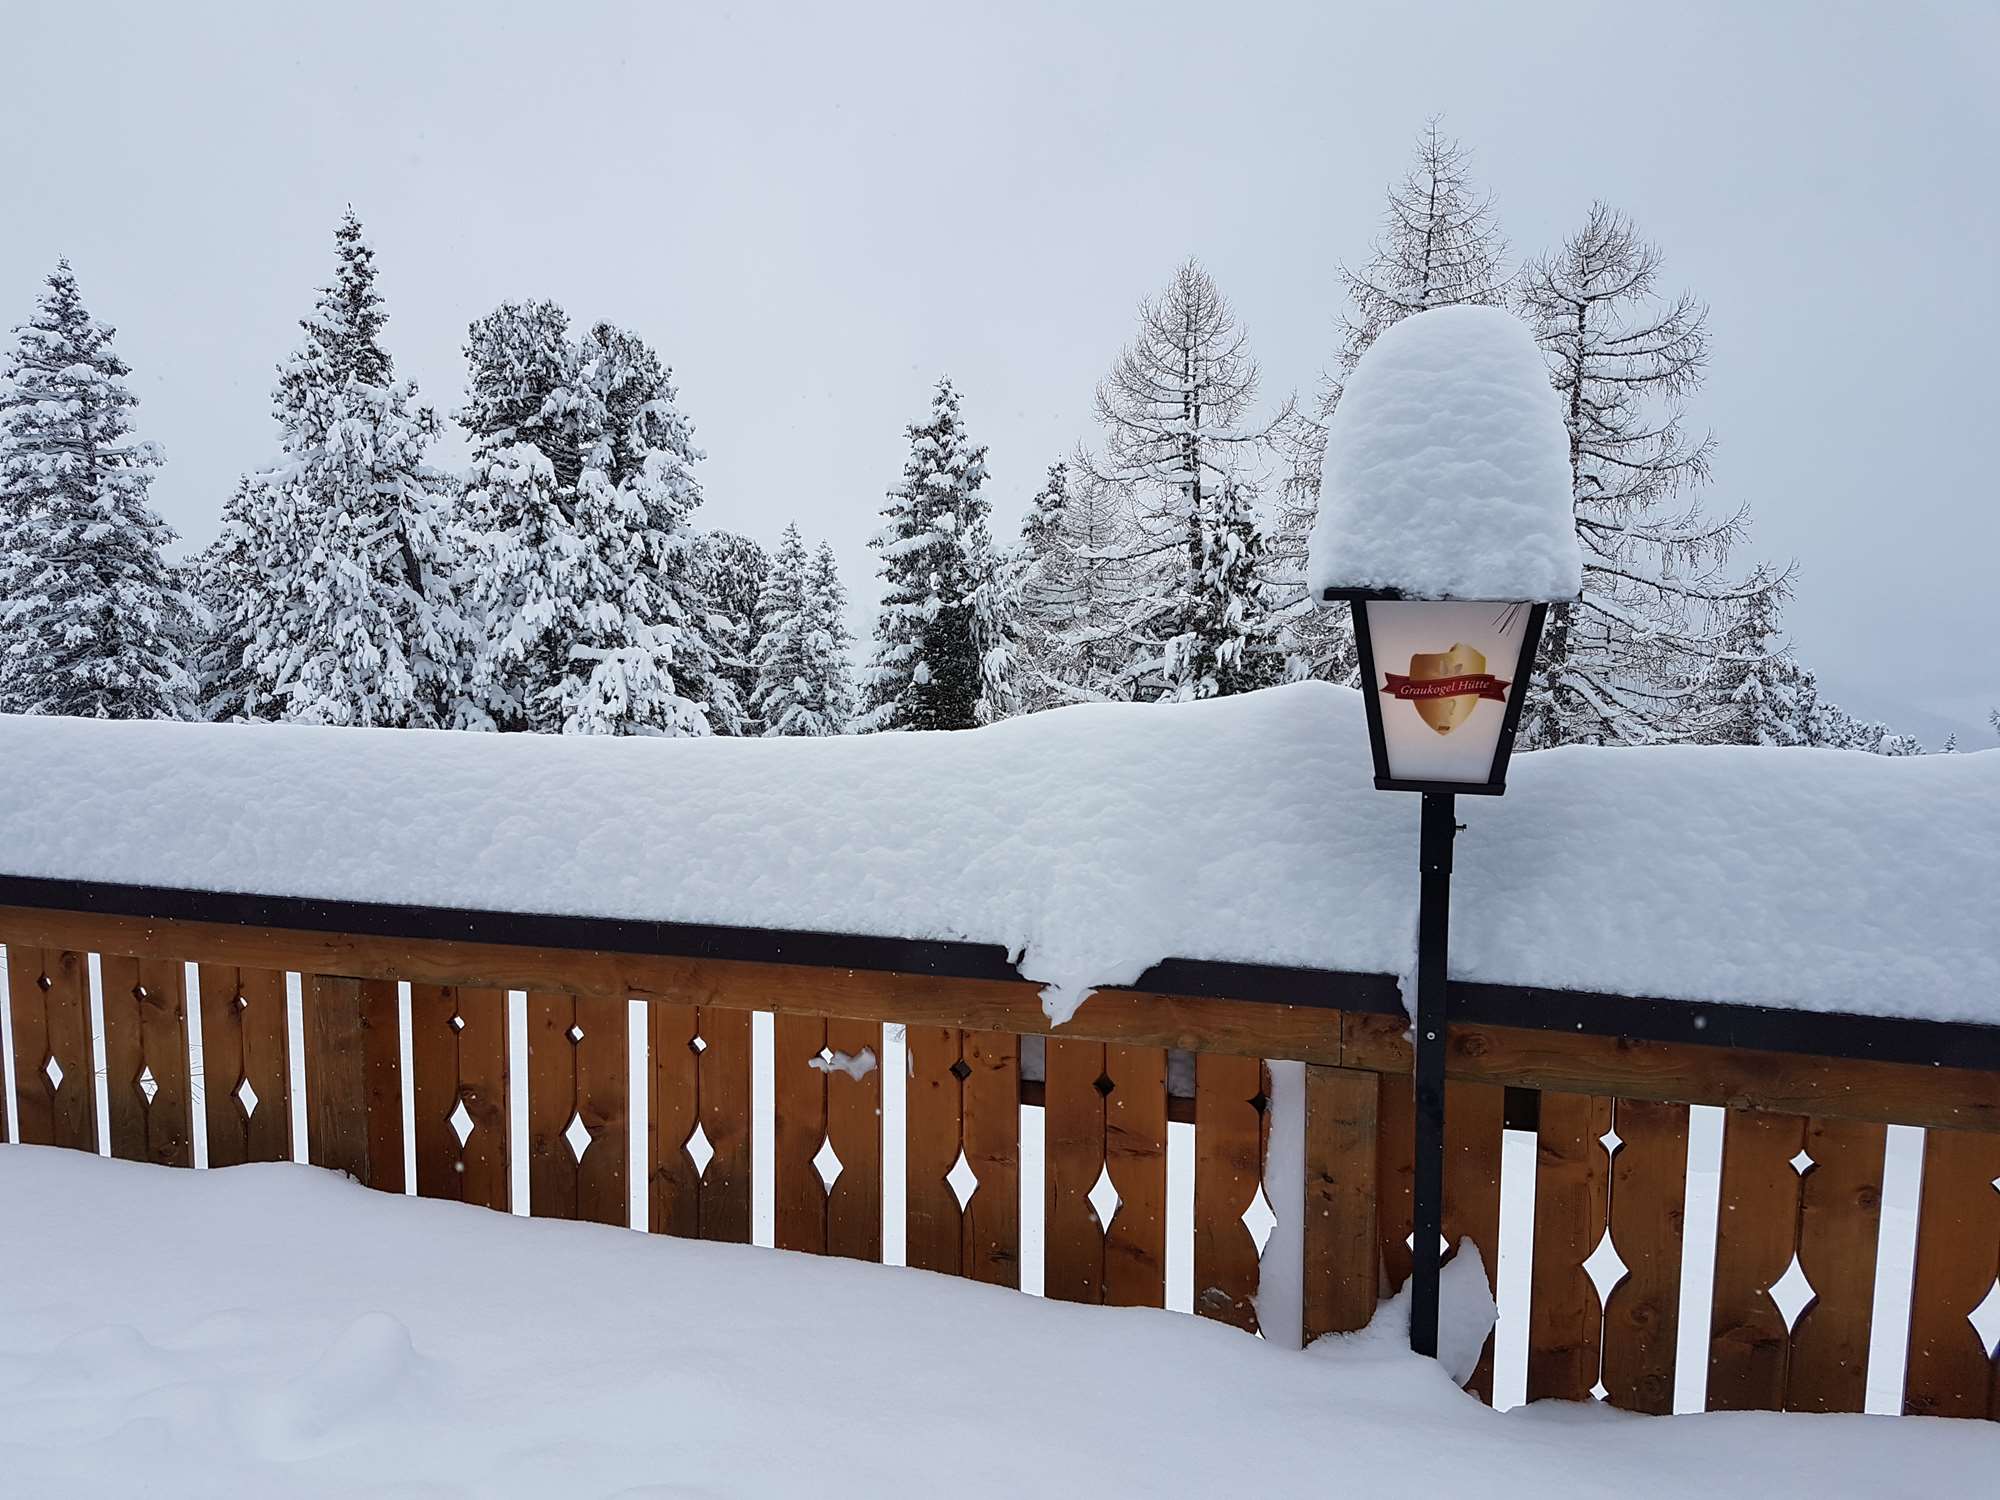 Snowfall in Bad Gastein